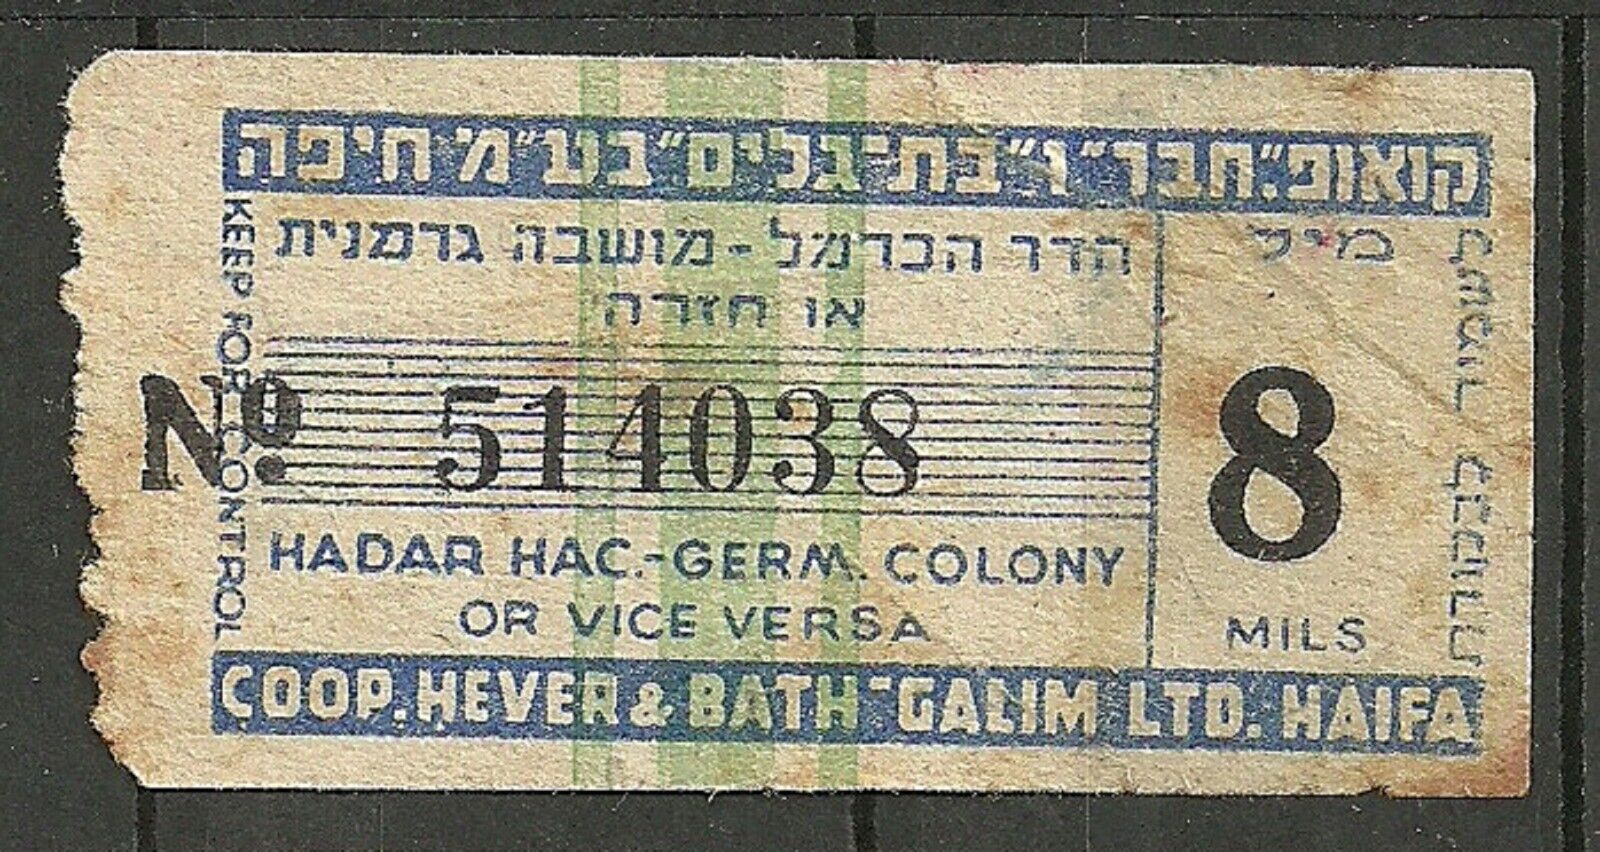 Judaica Palestine Rare Old Bus Ticket  Coop Hever Bath Galim Haifa German Colony